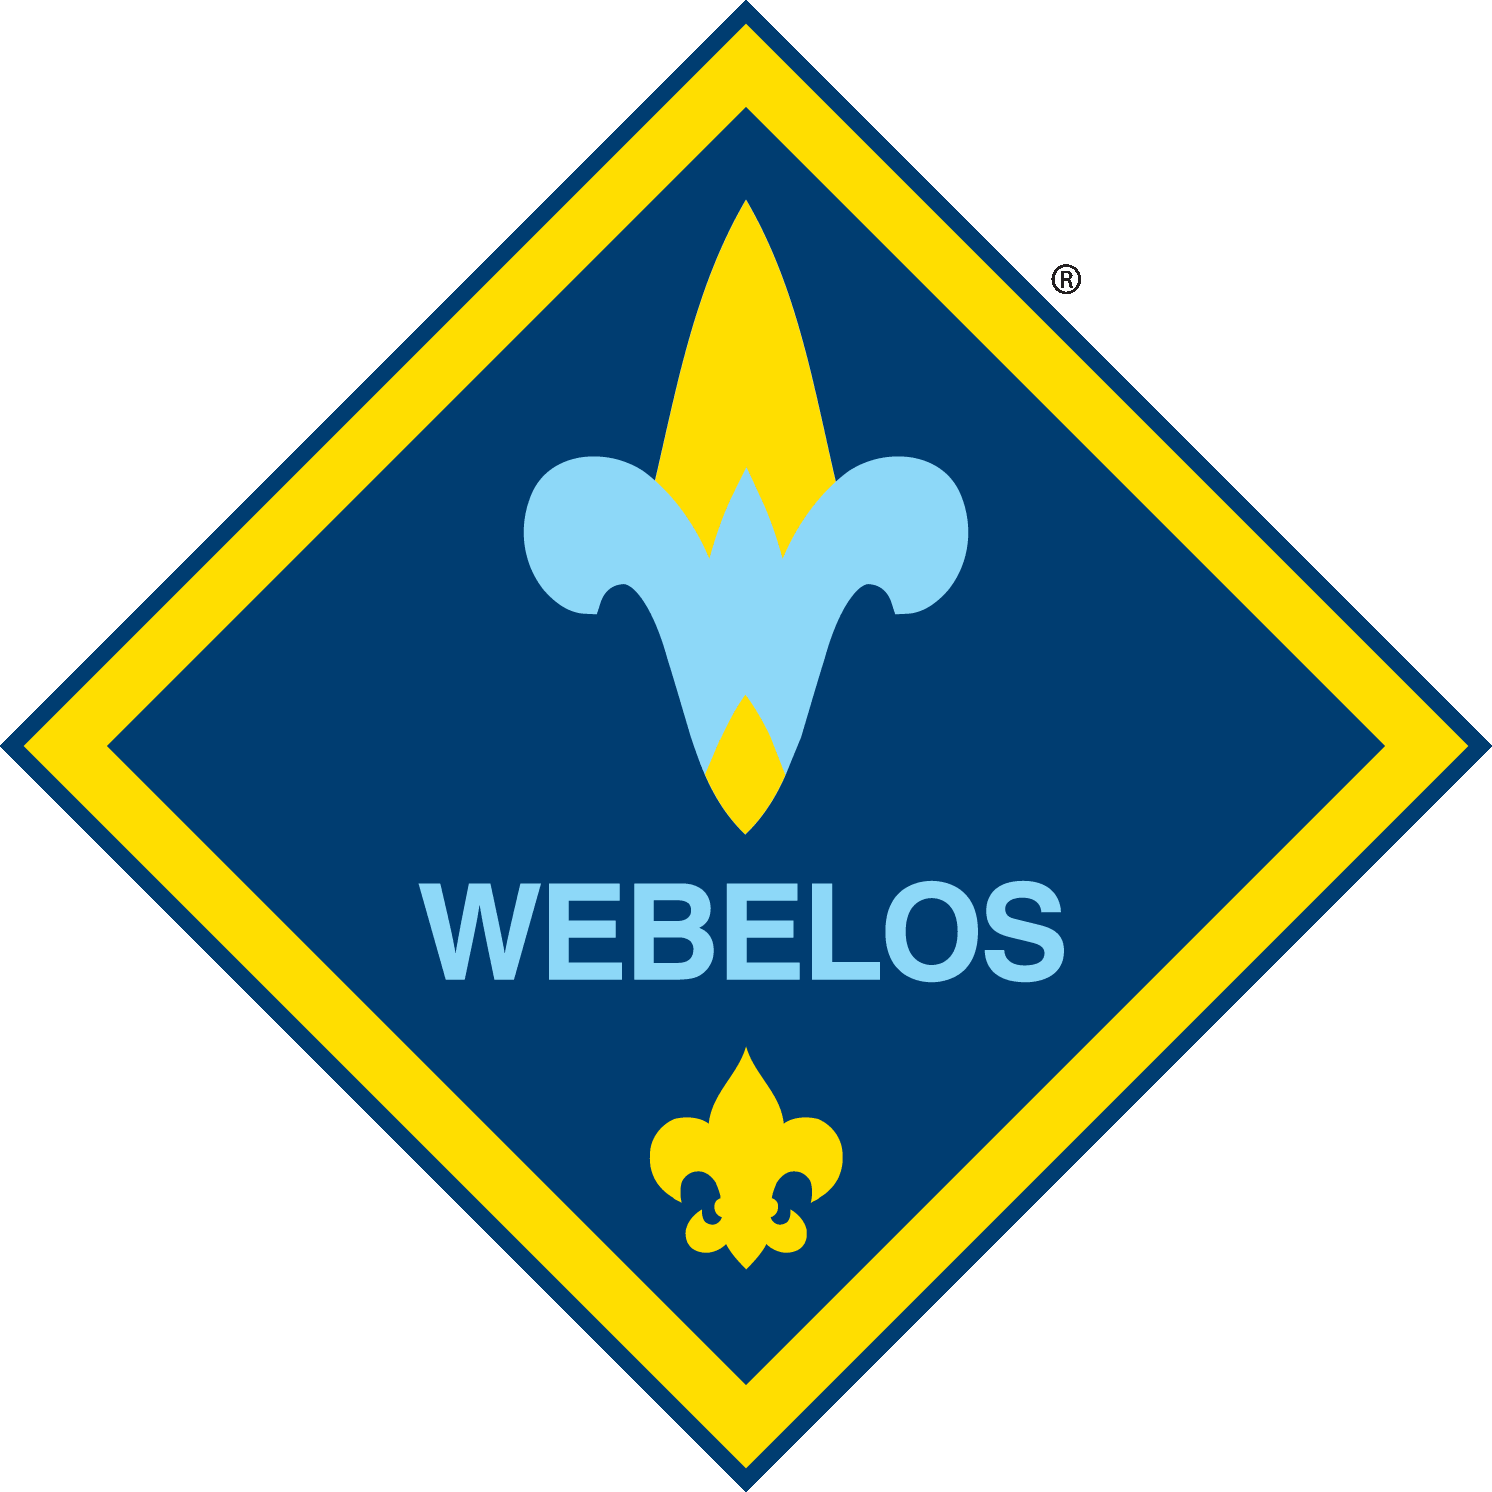 Webelos Cub Scout Clip Art N4 free image.